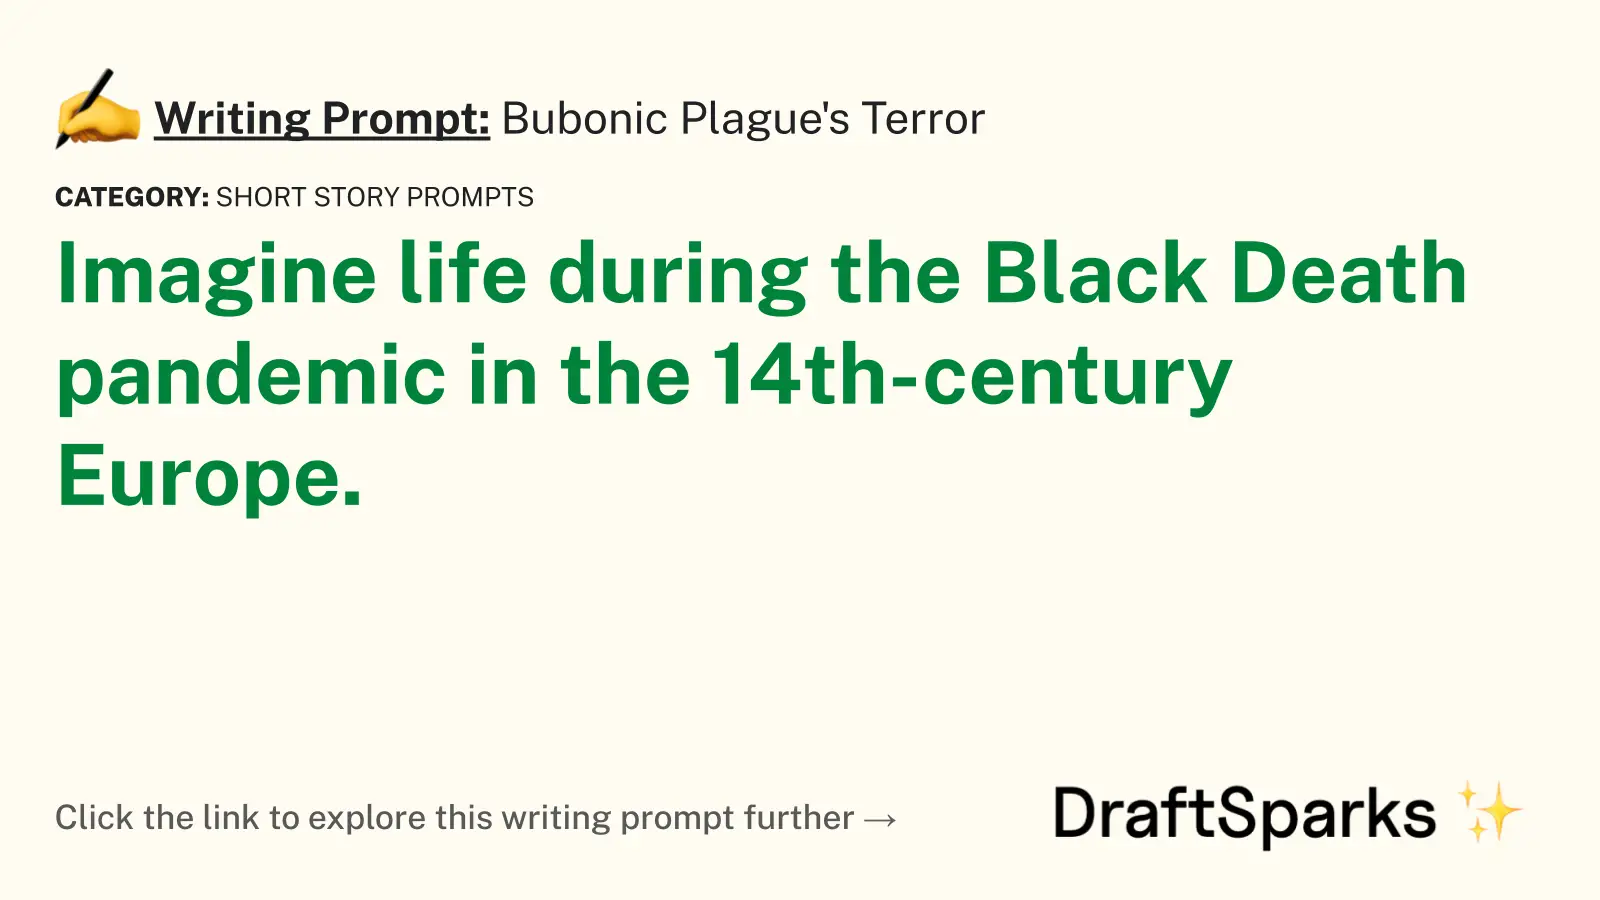 Bubonic Plague’s Terror